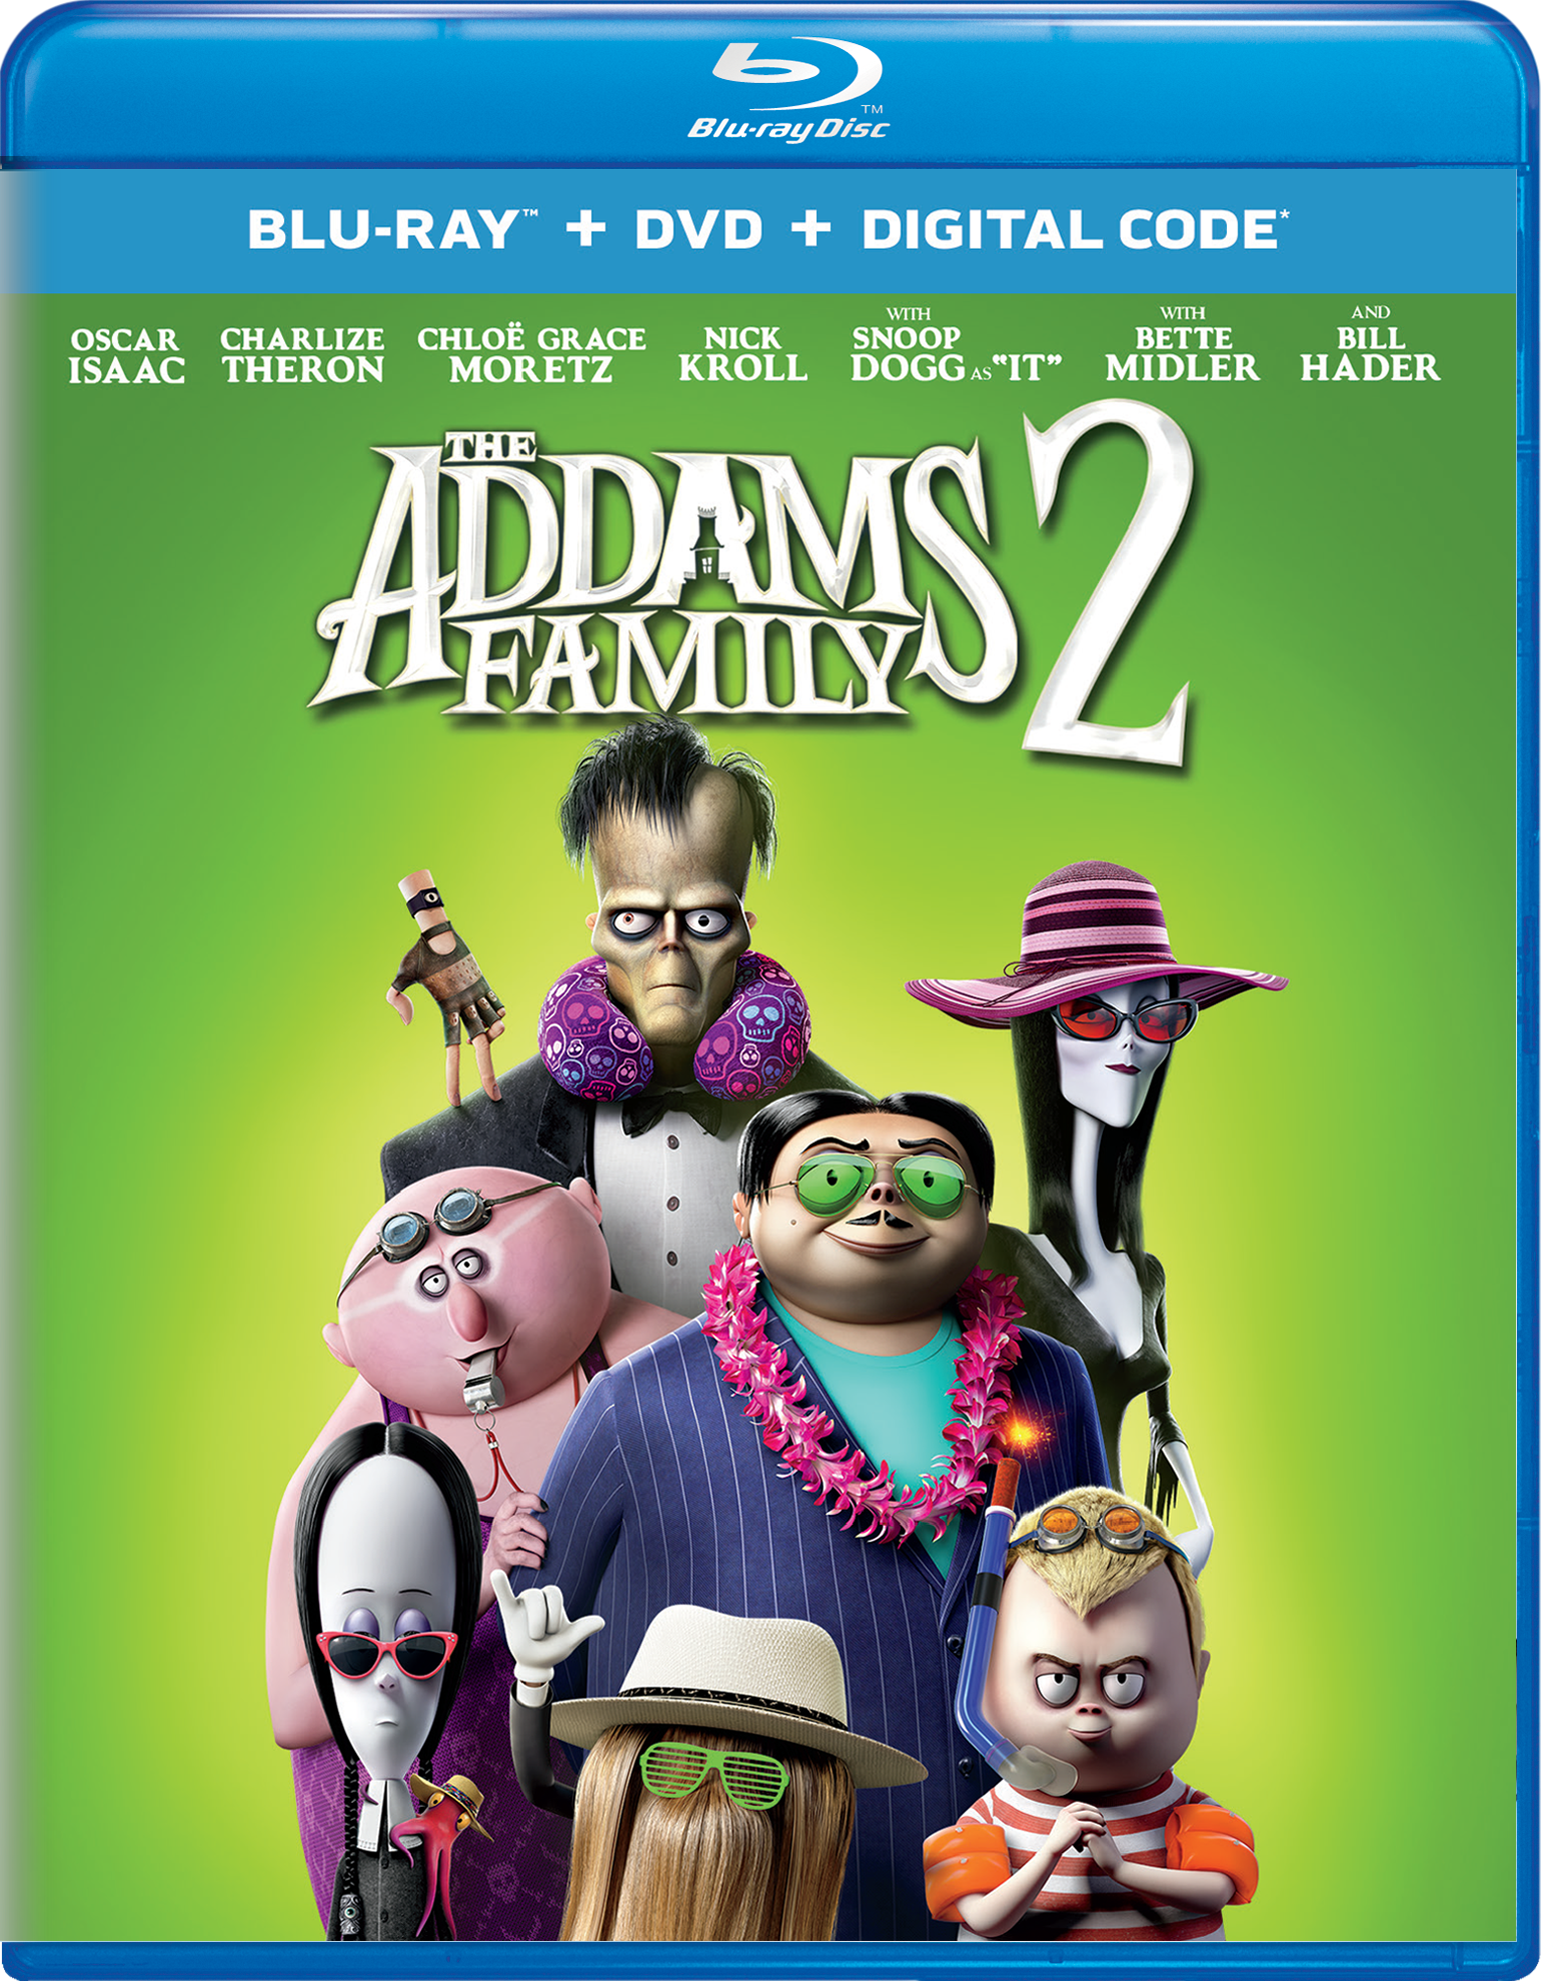 #Win THE ADDAMS FAMILY 2 on Blu-ray #AddamsFamily2